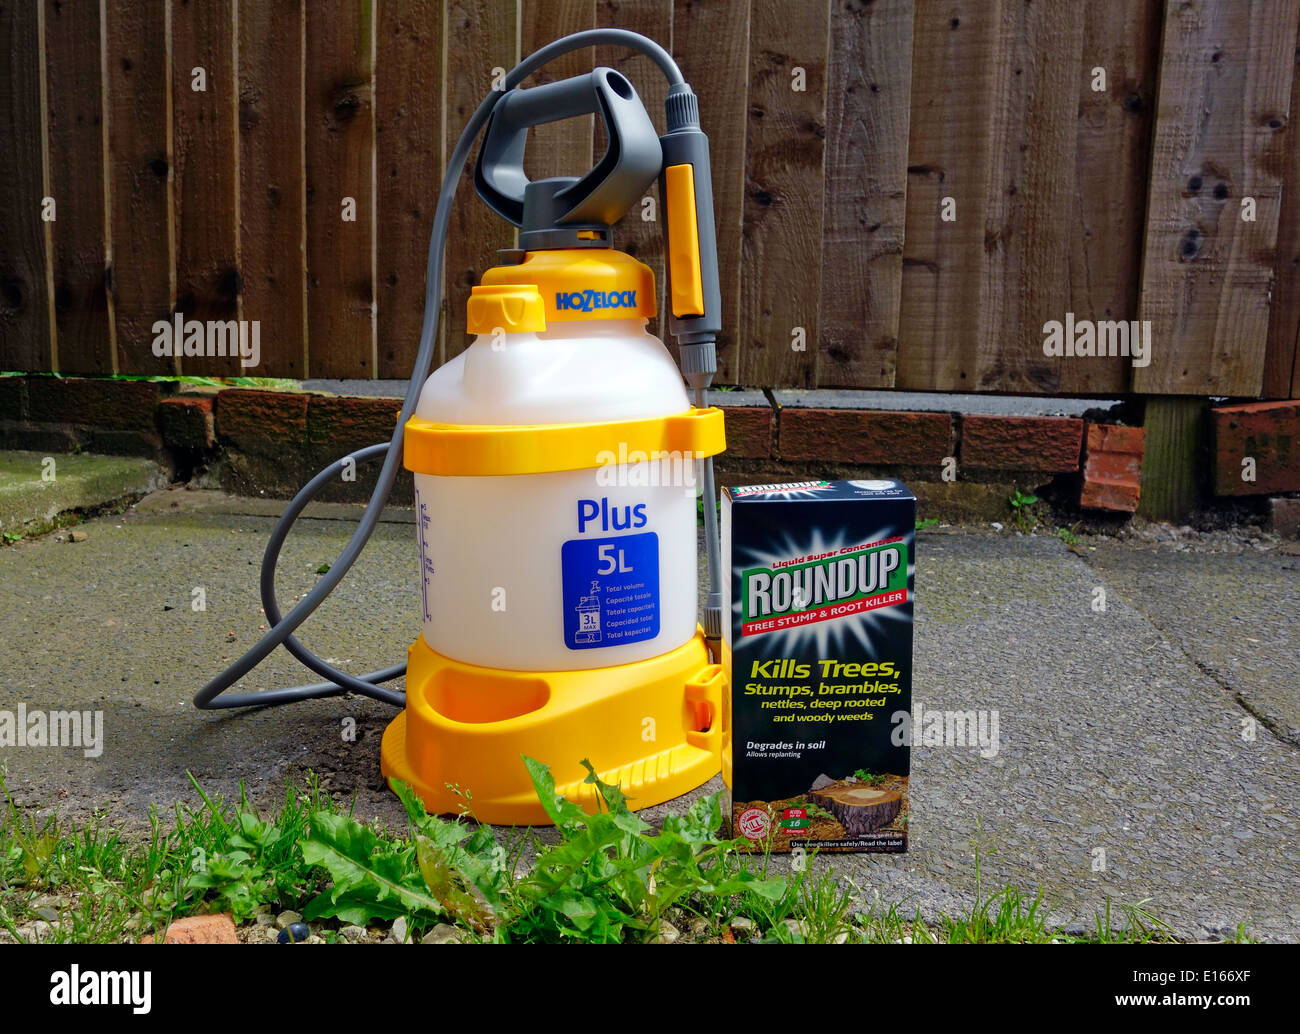 Hozelock Garden Pressure Sprayer and Roundup Herbicide, UK Stock Photo